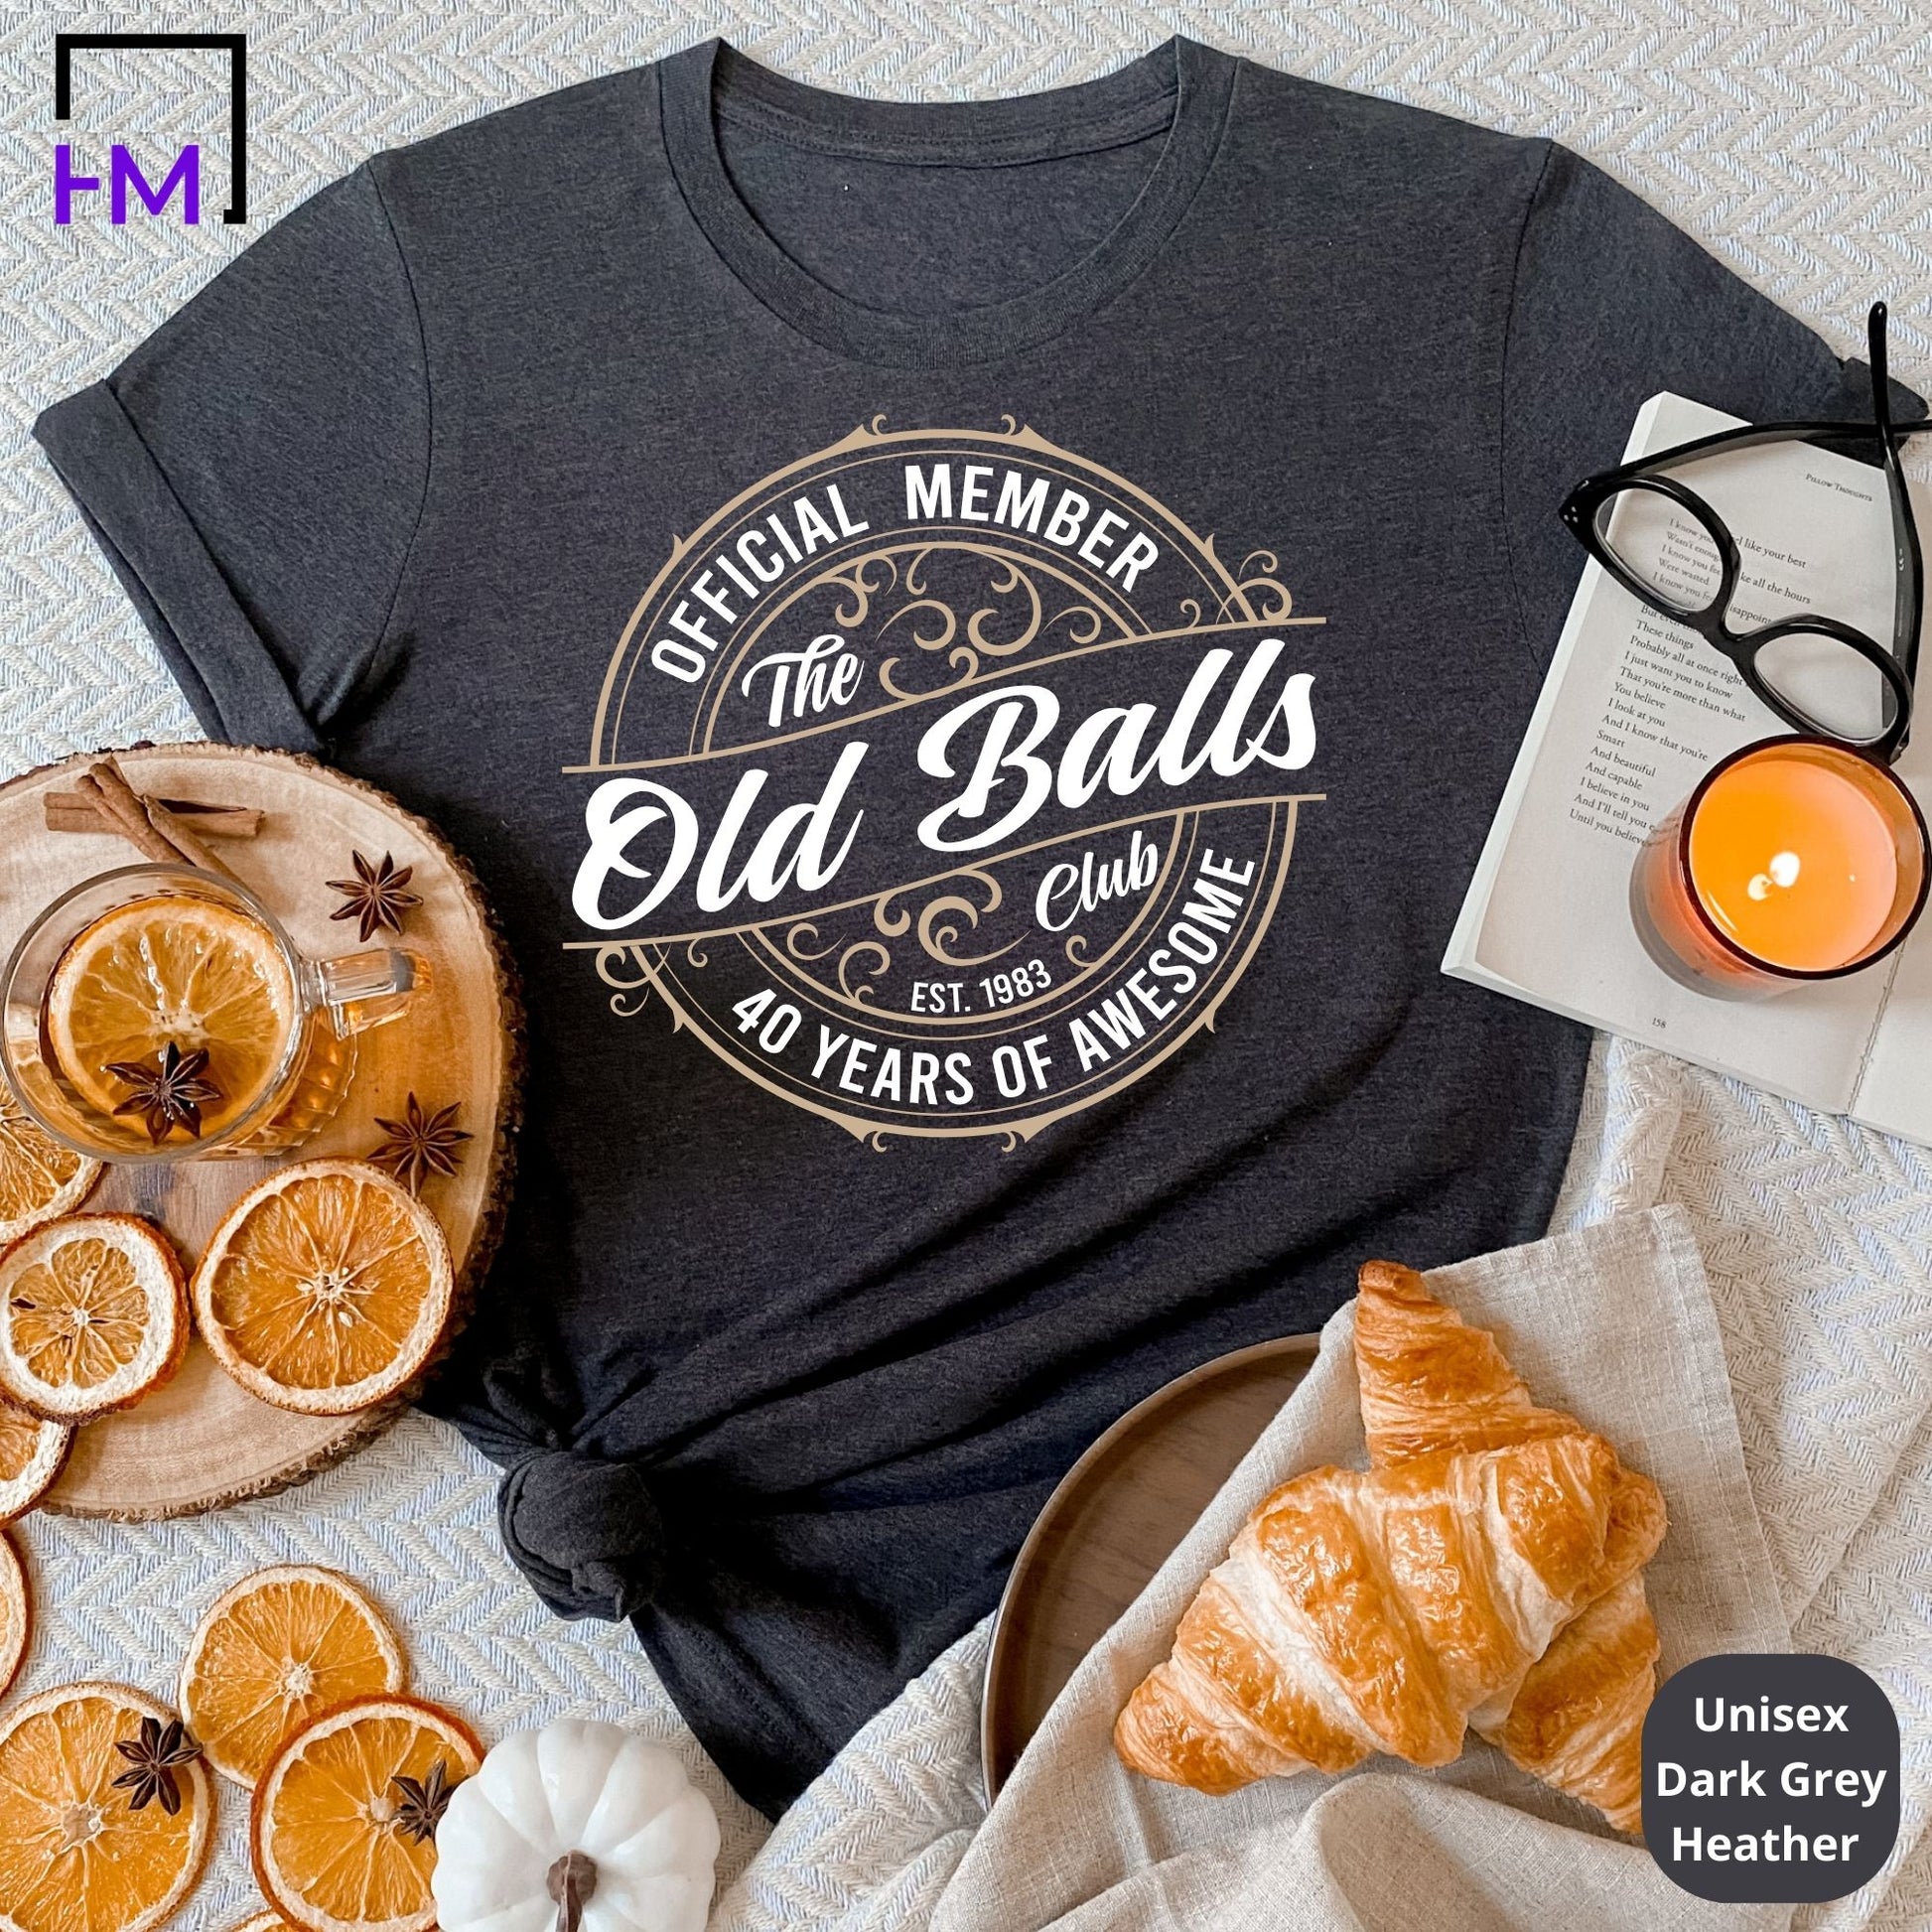 Old Balls Club - Funny 40th Birthday Shirt for Men